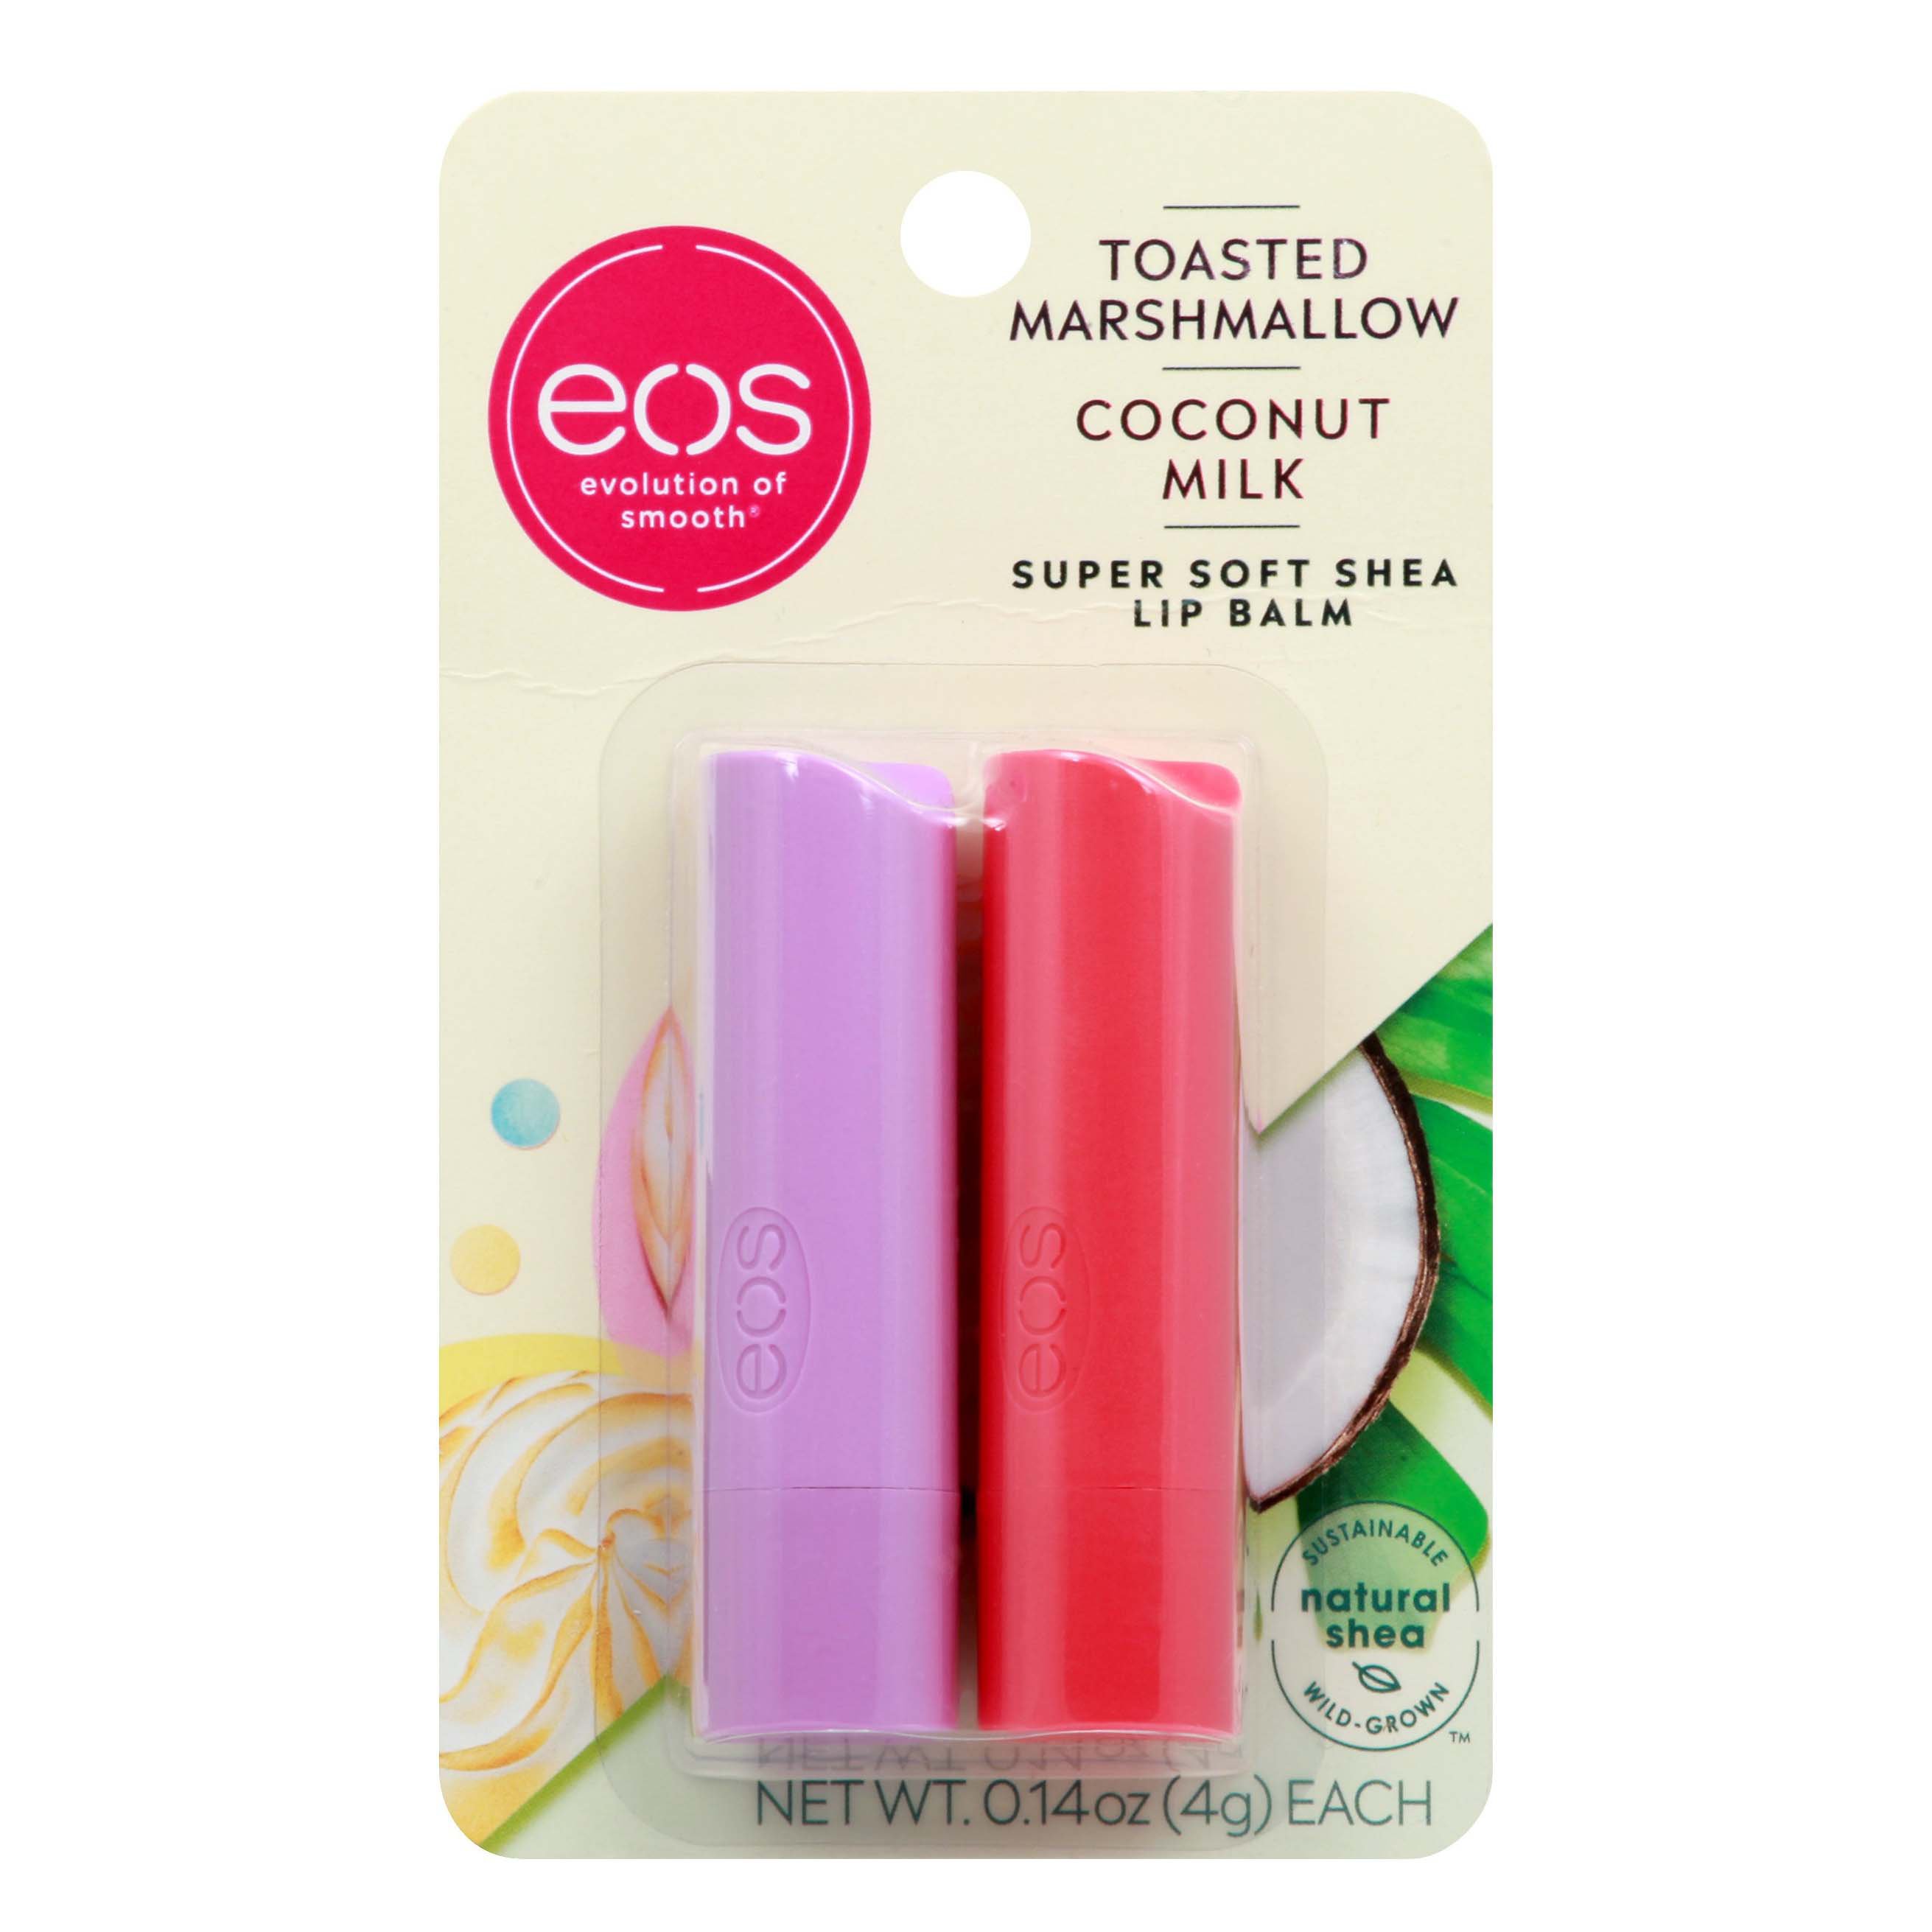 eos Toasted Marshmallow Coconut Milk Lip Balm - Shop Lip Balm ...